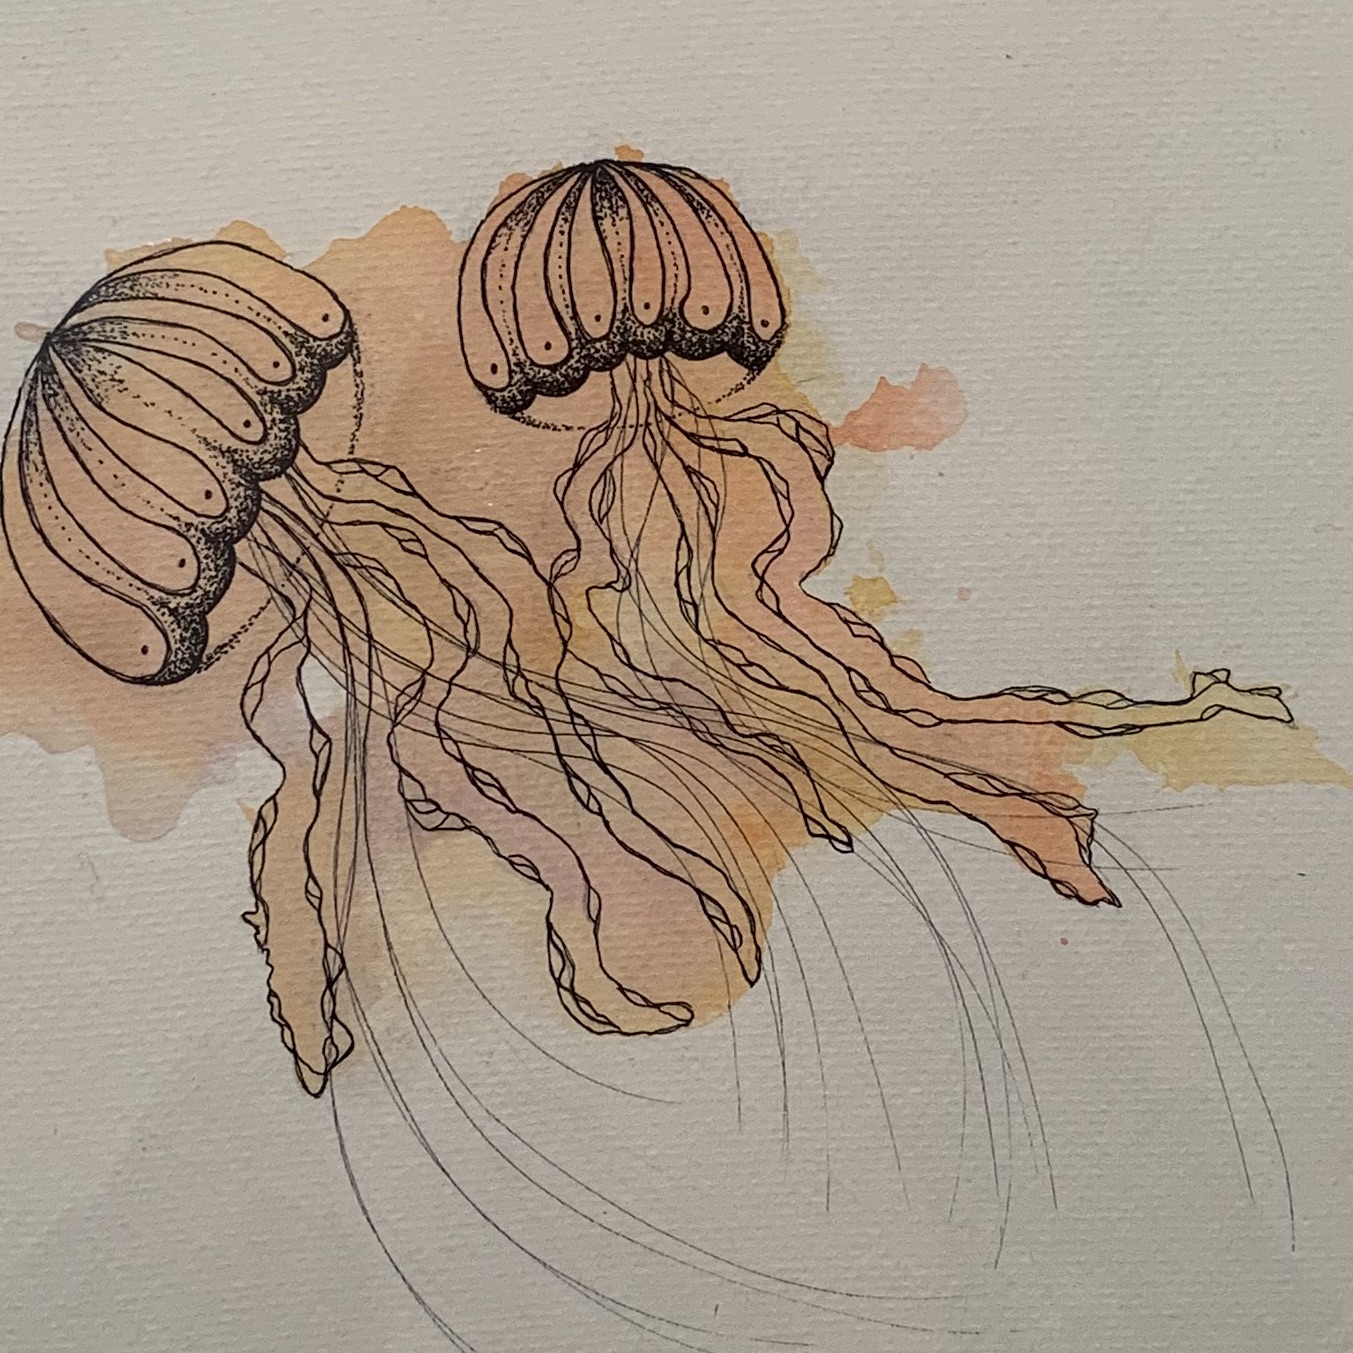 004: Image description: two orange jellyfish